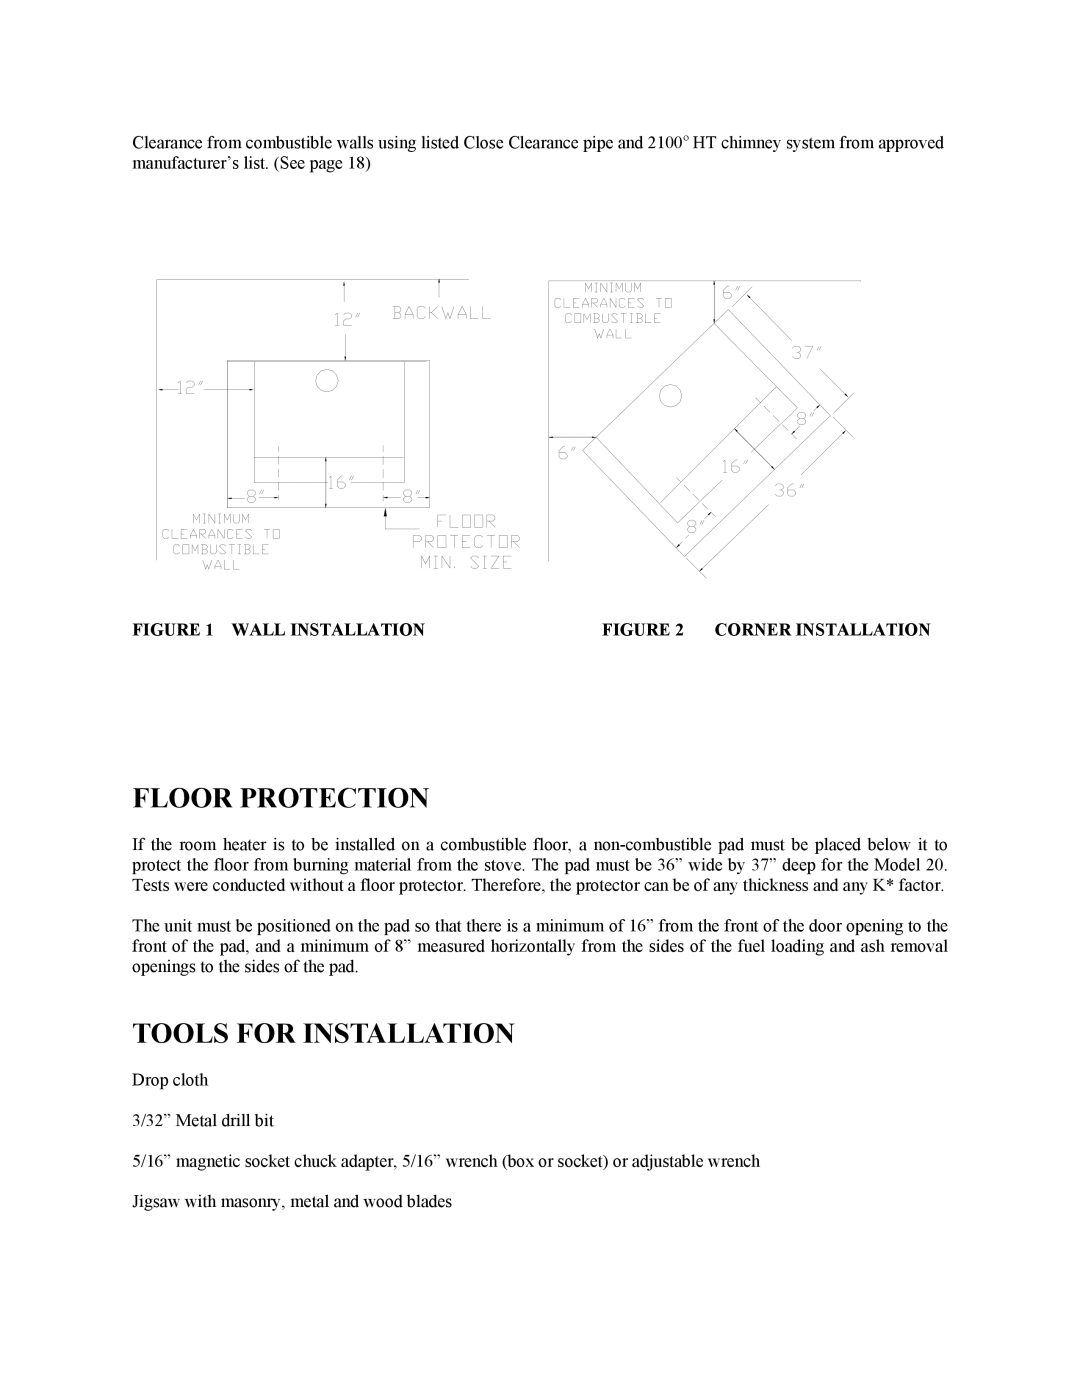 New Buck Corporation 20 Room Heater manual Wall Installation, Corner Installation, Floor Protection, Tools For Installation 